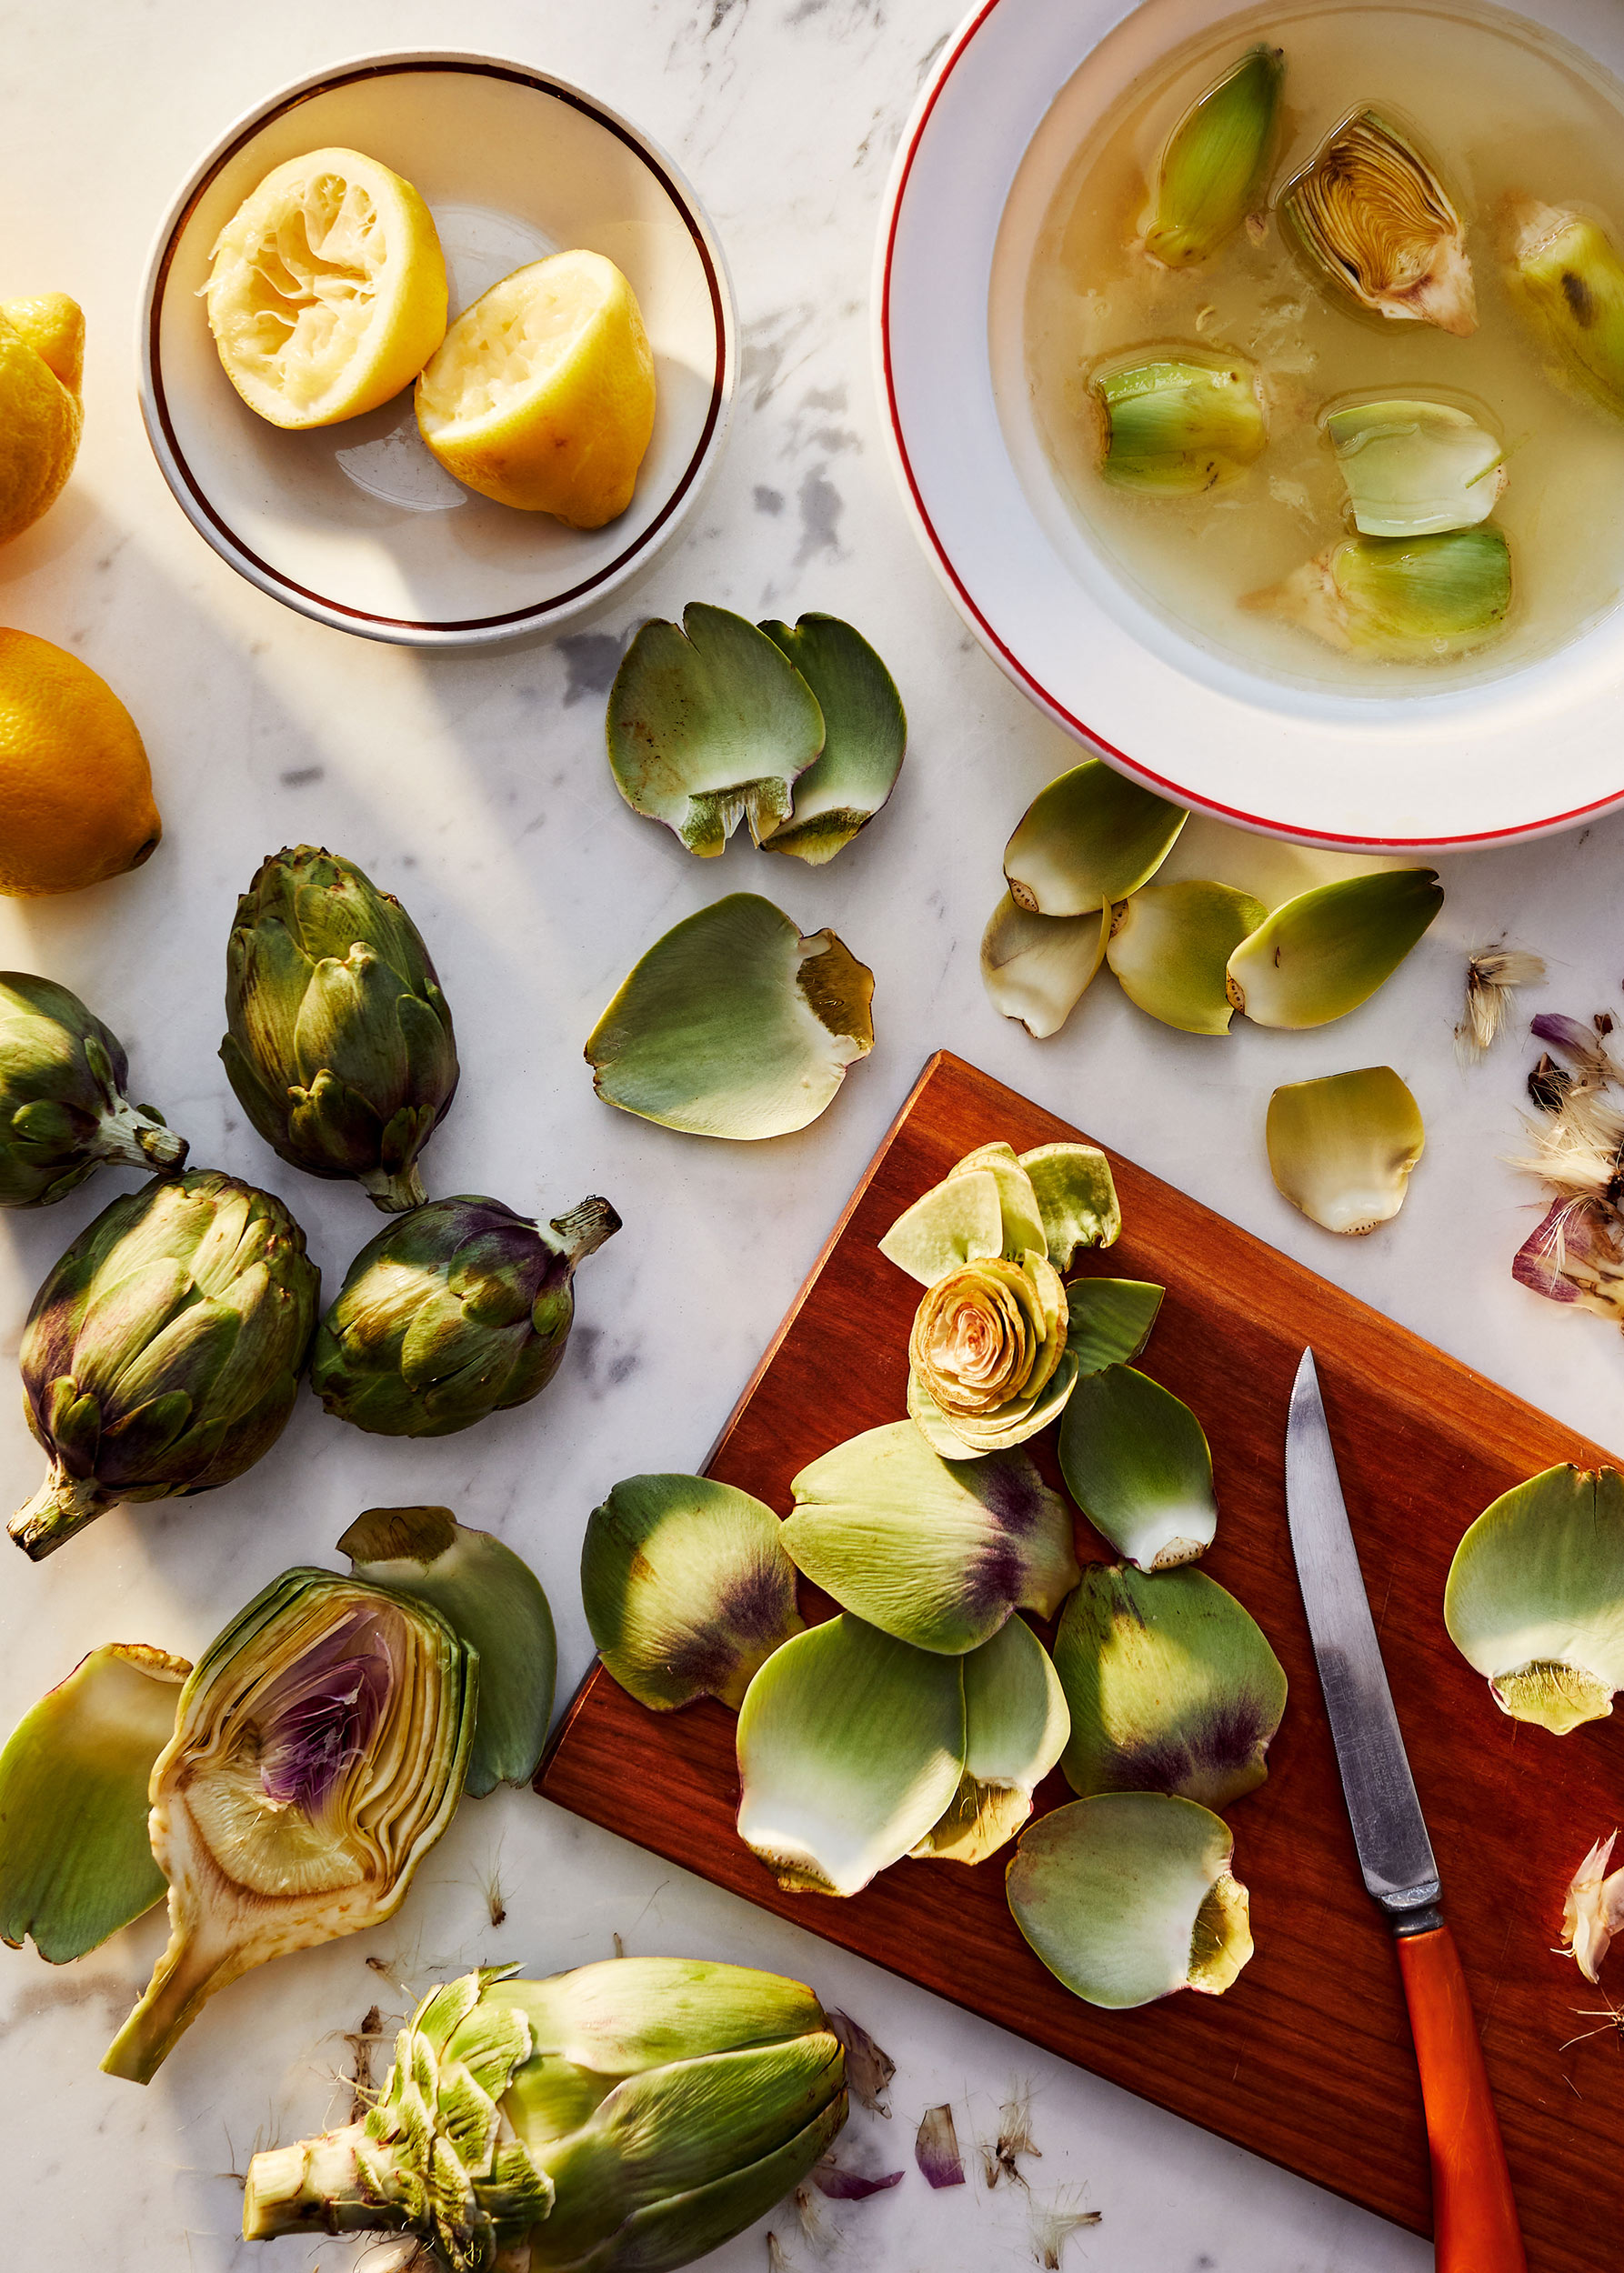  Artichokes in lemon juice by food photographed Nico Schinco